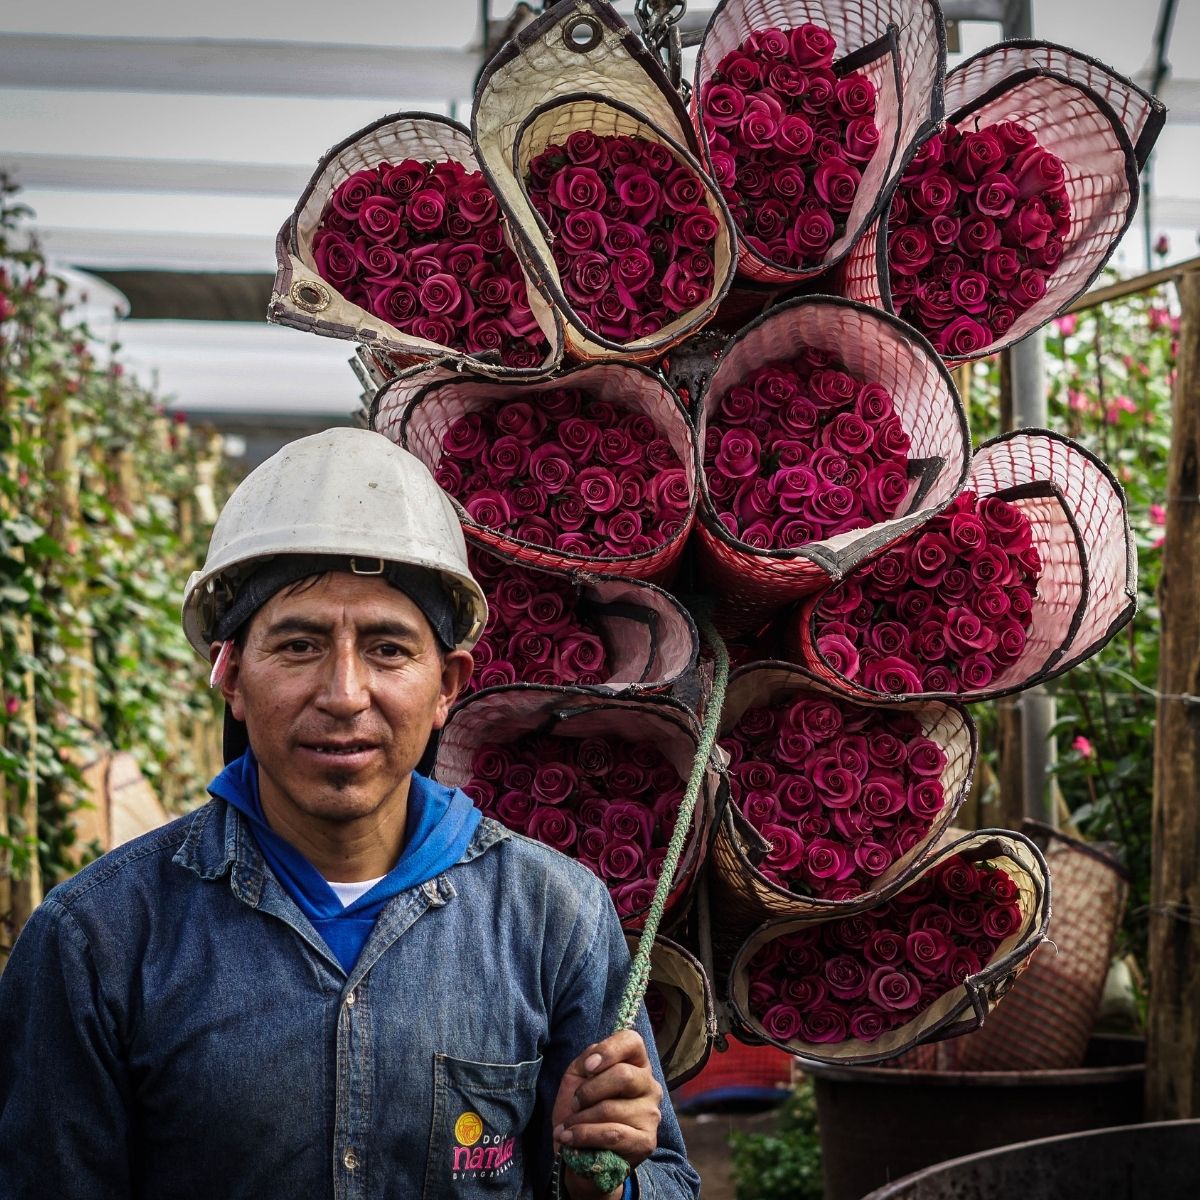 Fresh Roses From Ecuador - Farm Direct - Clear origin from trustworthy sources.